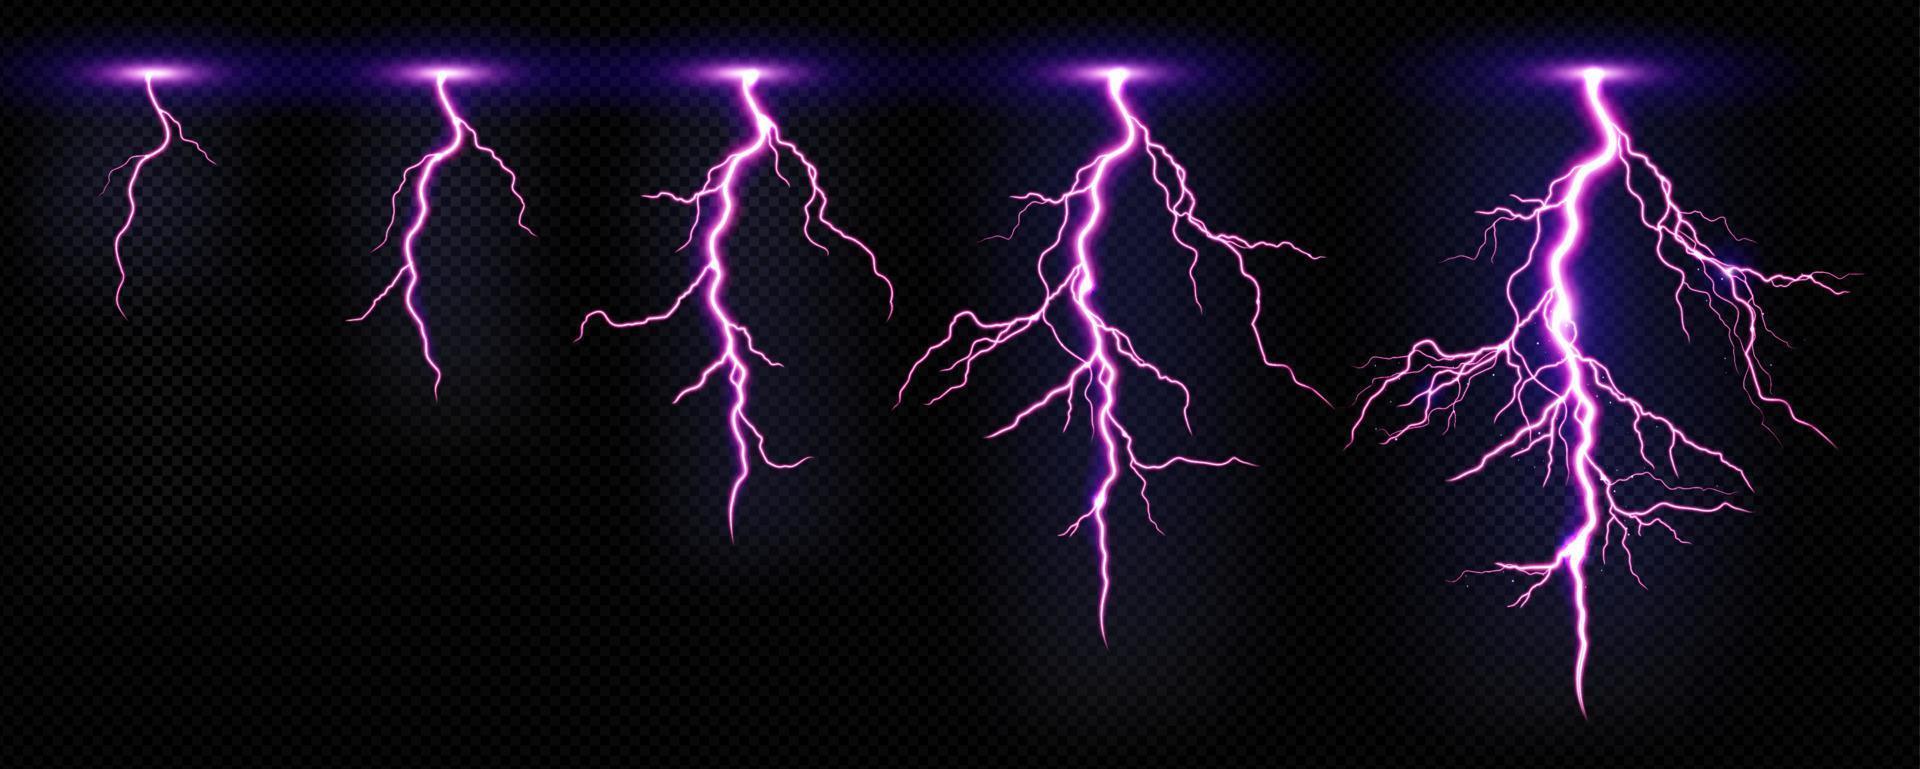 Animation sprite sheet of thunderbolt strike vector